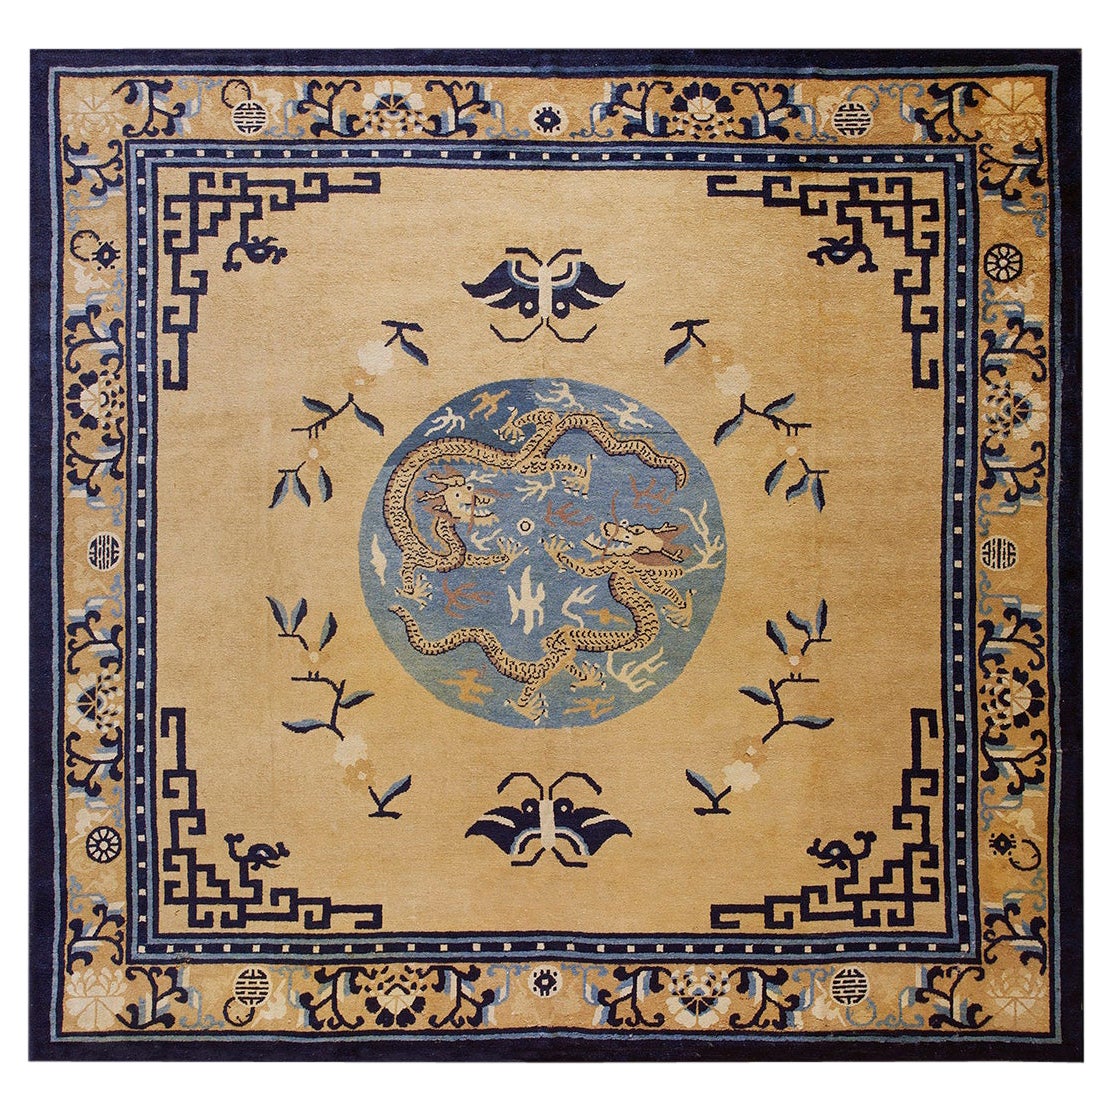 19th Century Chinese Mongolian Carpet ( 9'6" x 9'9" - 290 x 298 )